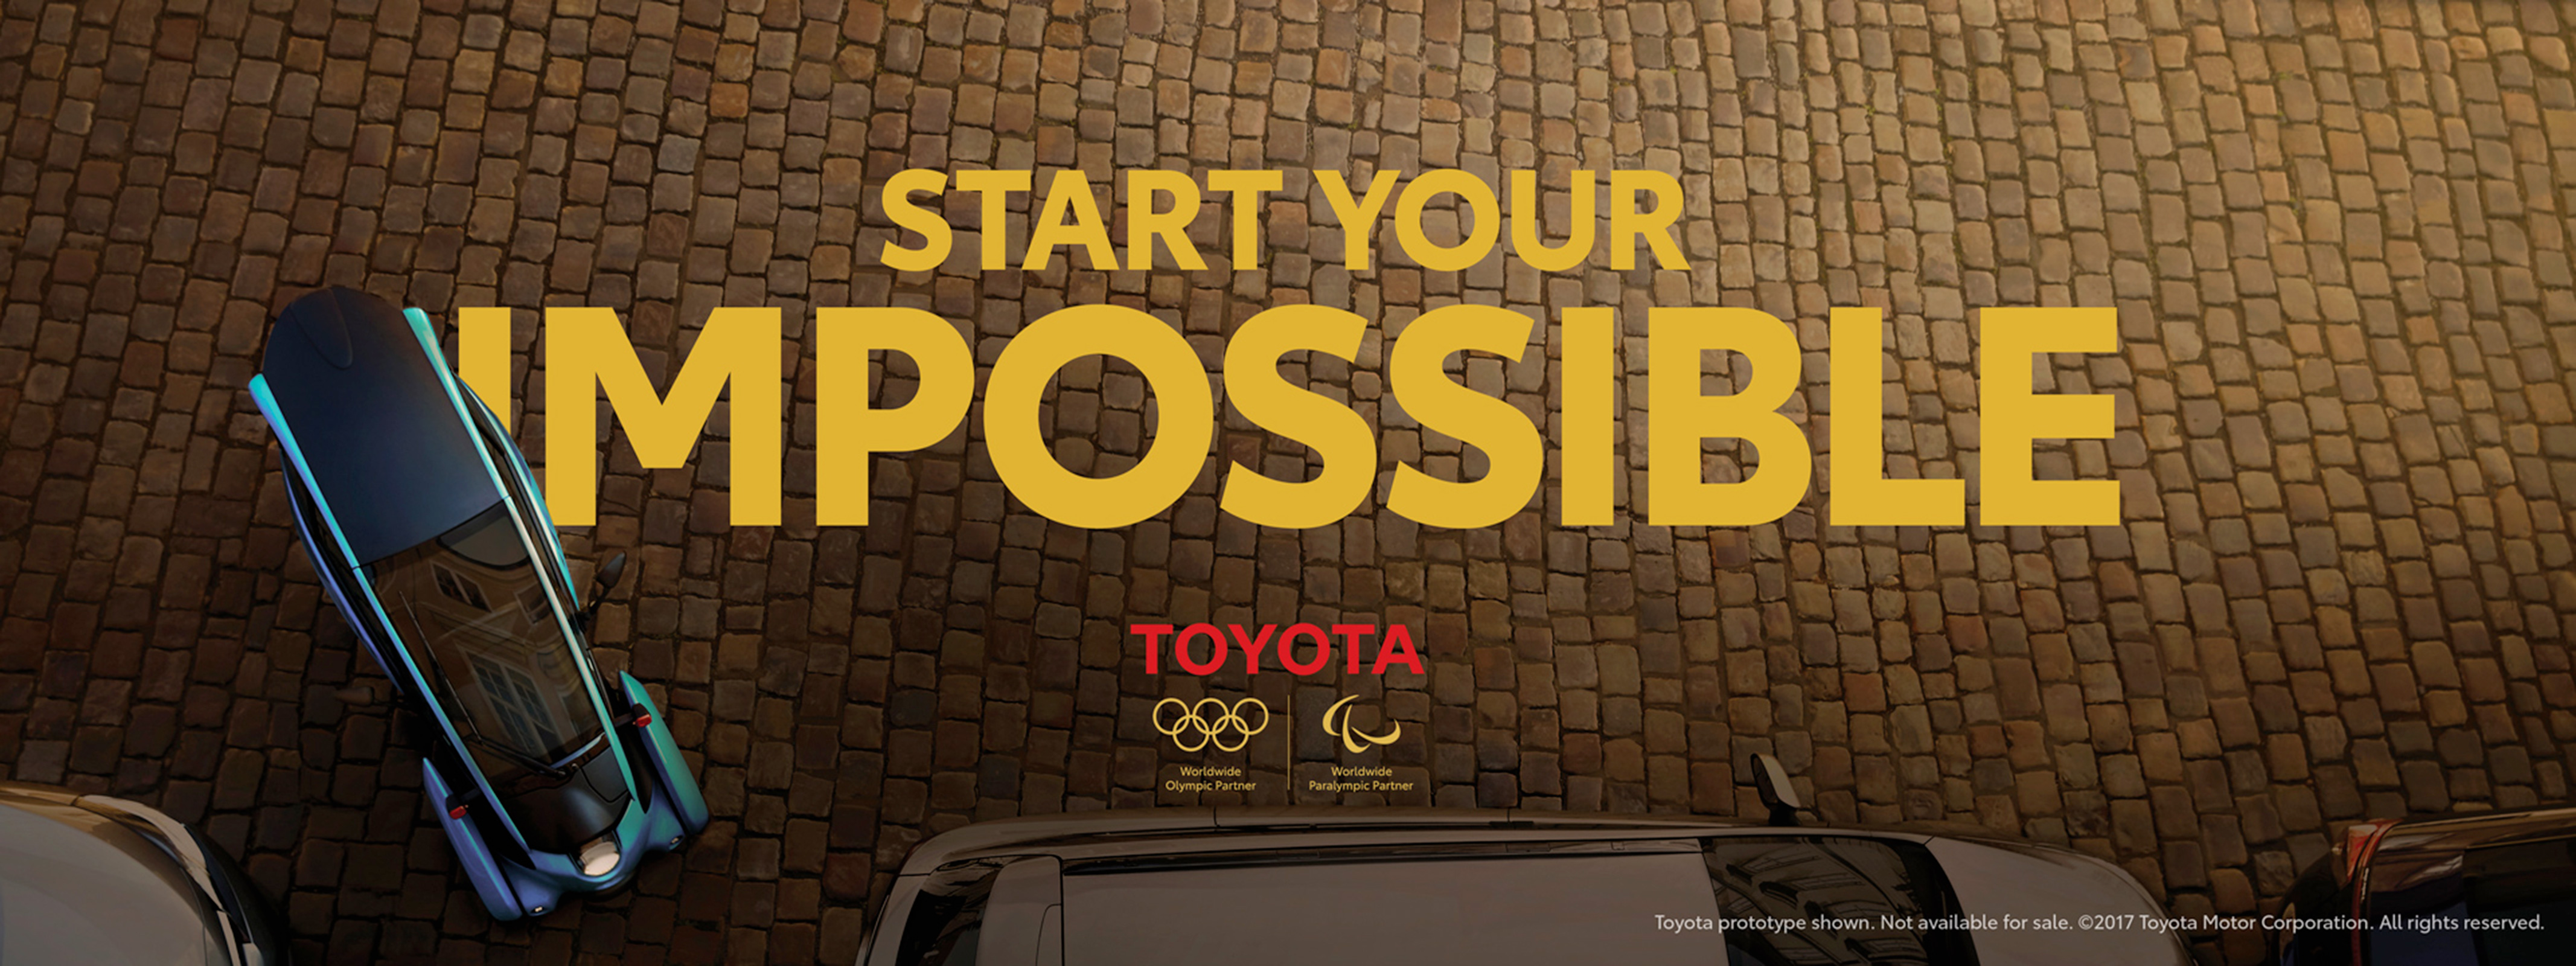 Toyota Official Partner Olympic Sponsors IOC